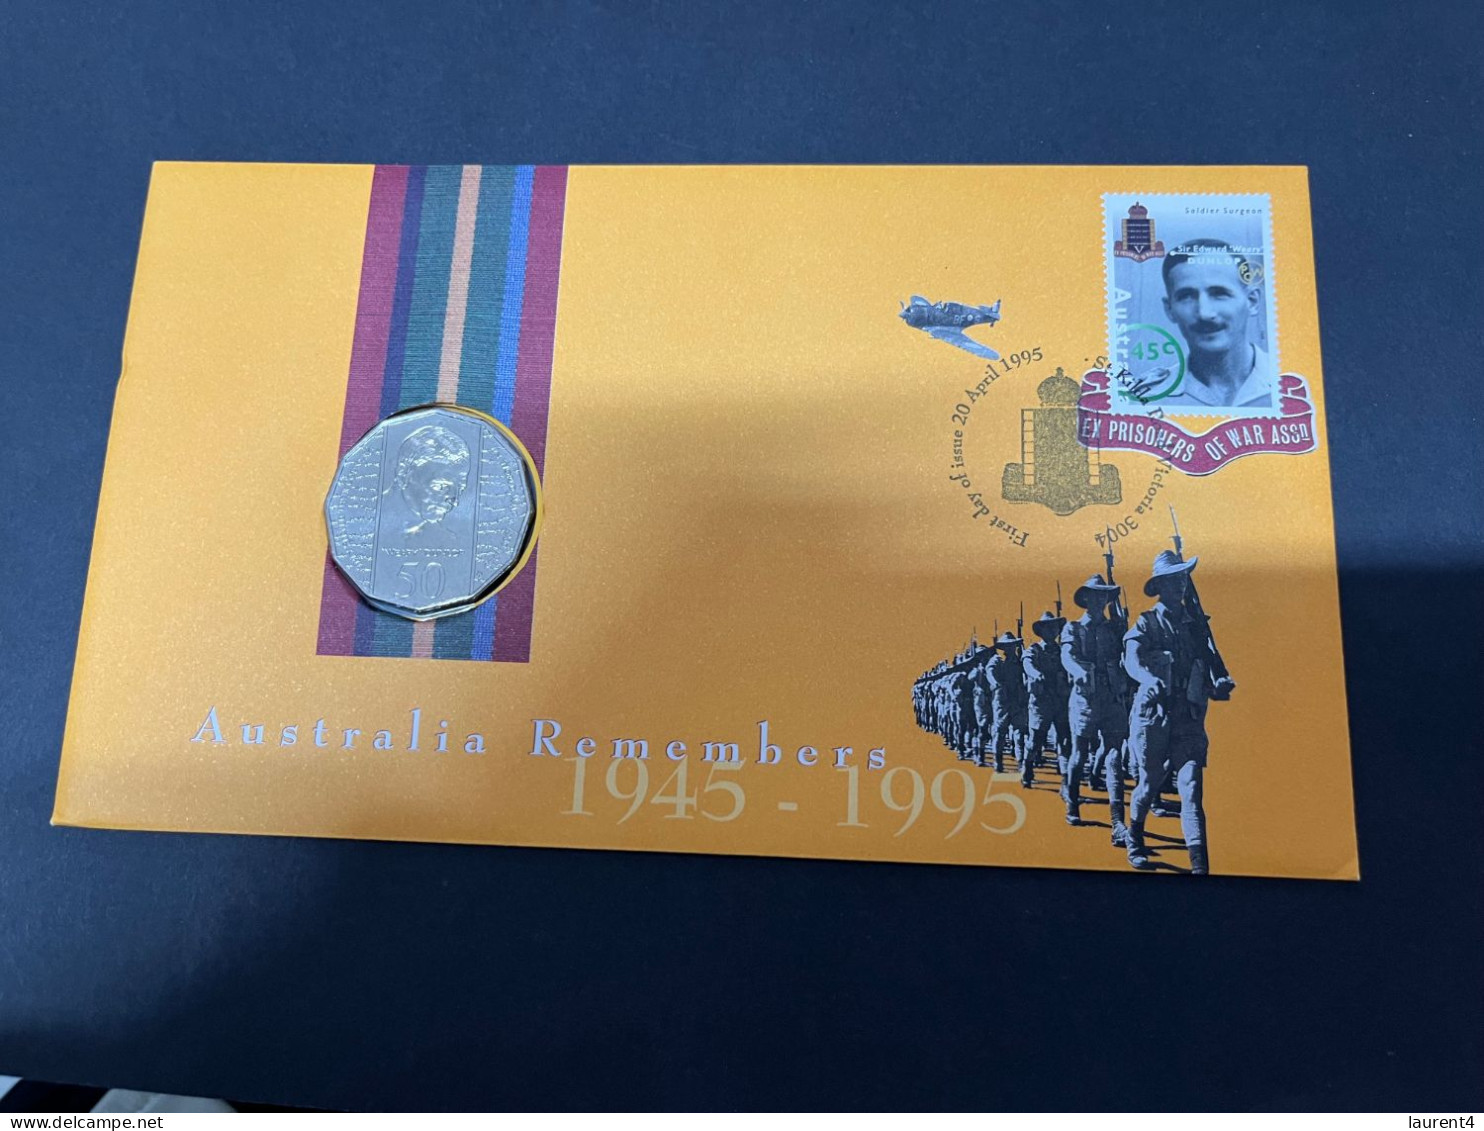 24-7-2023 (3 S 19) PNC Australia 1995 - Australia Remember - WWII - RAM 50c Coin (scarce) - 50 Cents